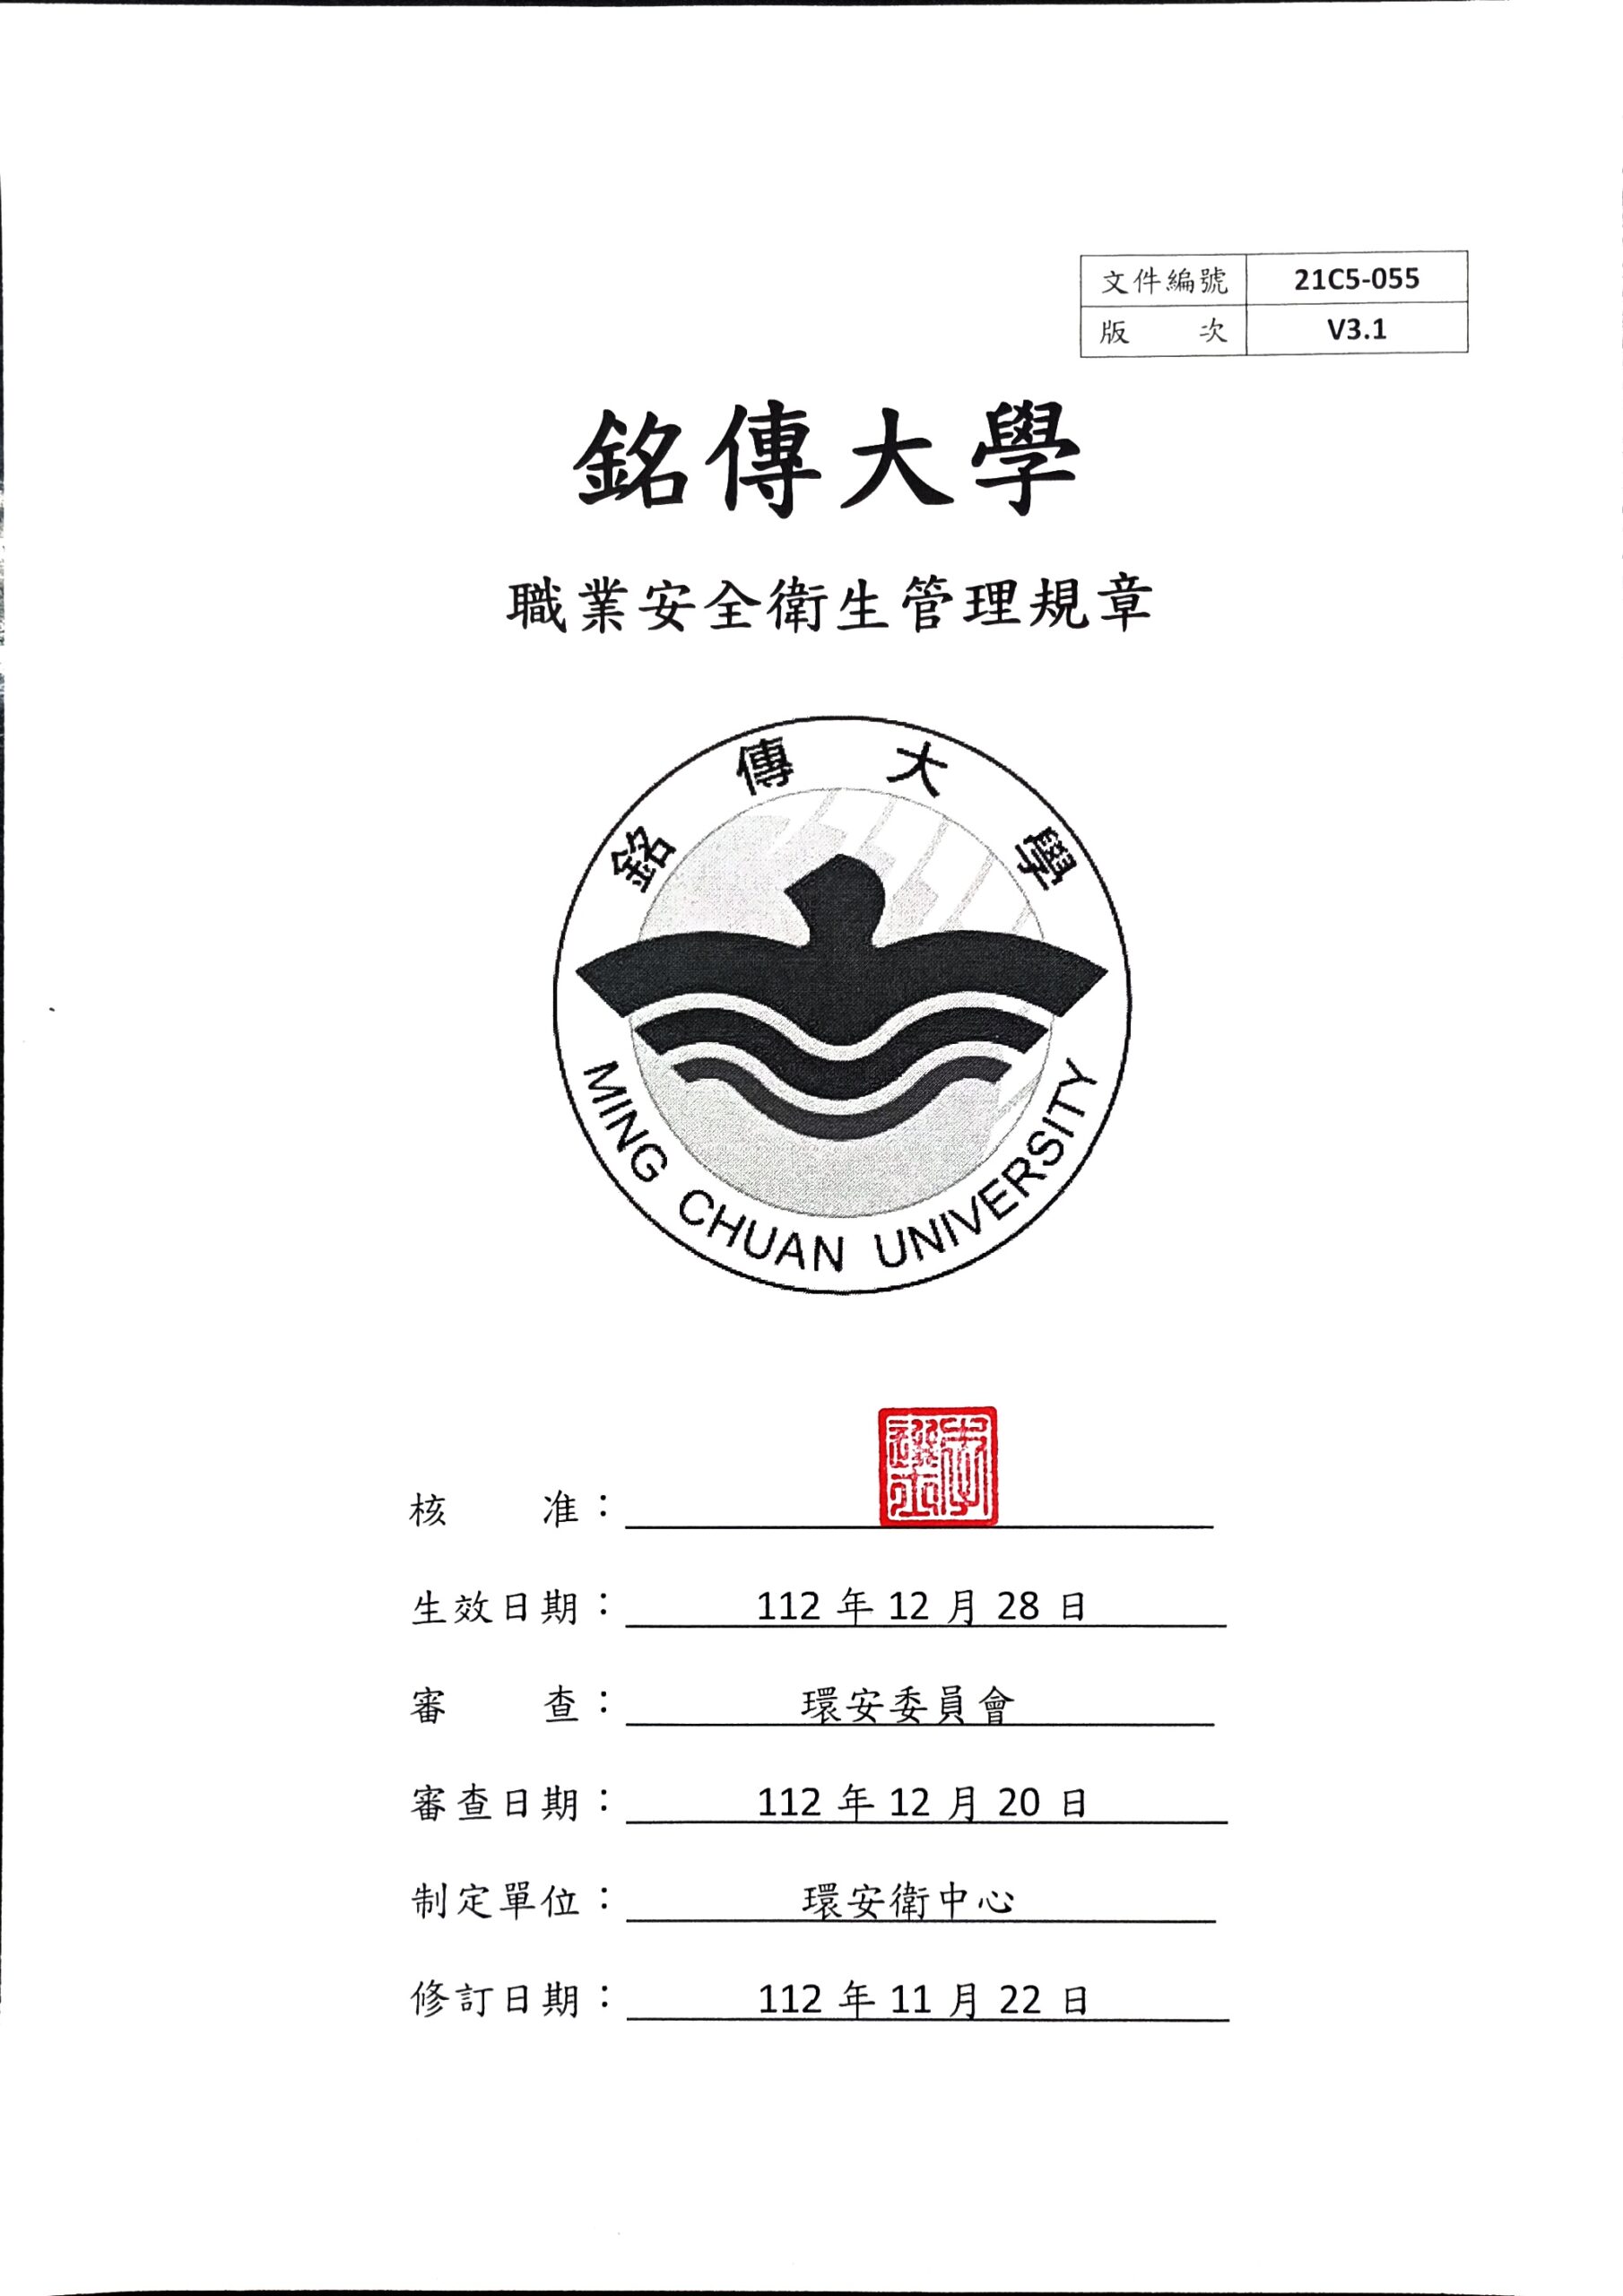 Featured image for “銘傳大學 職業安全衛生管理規章已於112年12月28日校長核定公佈實施”